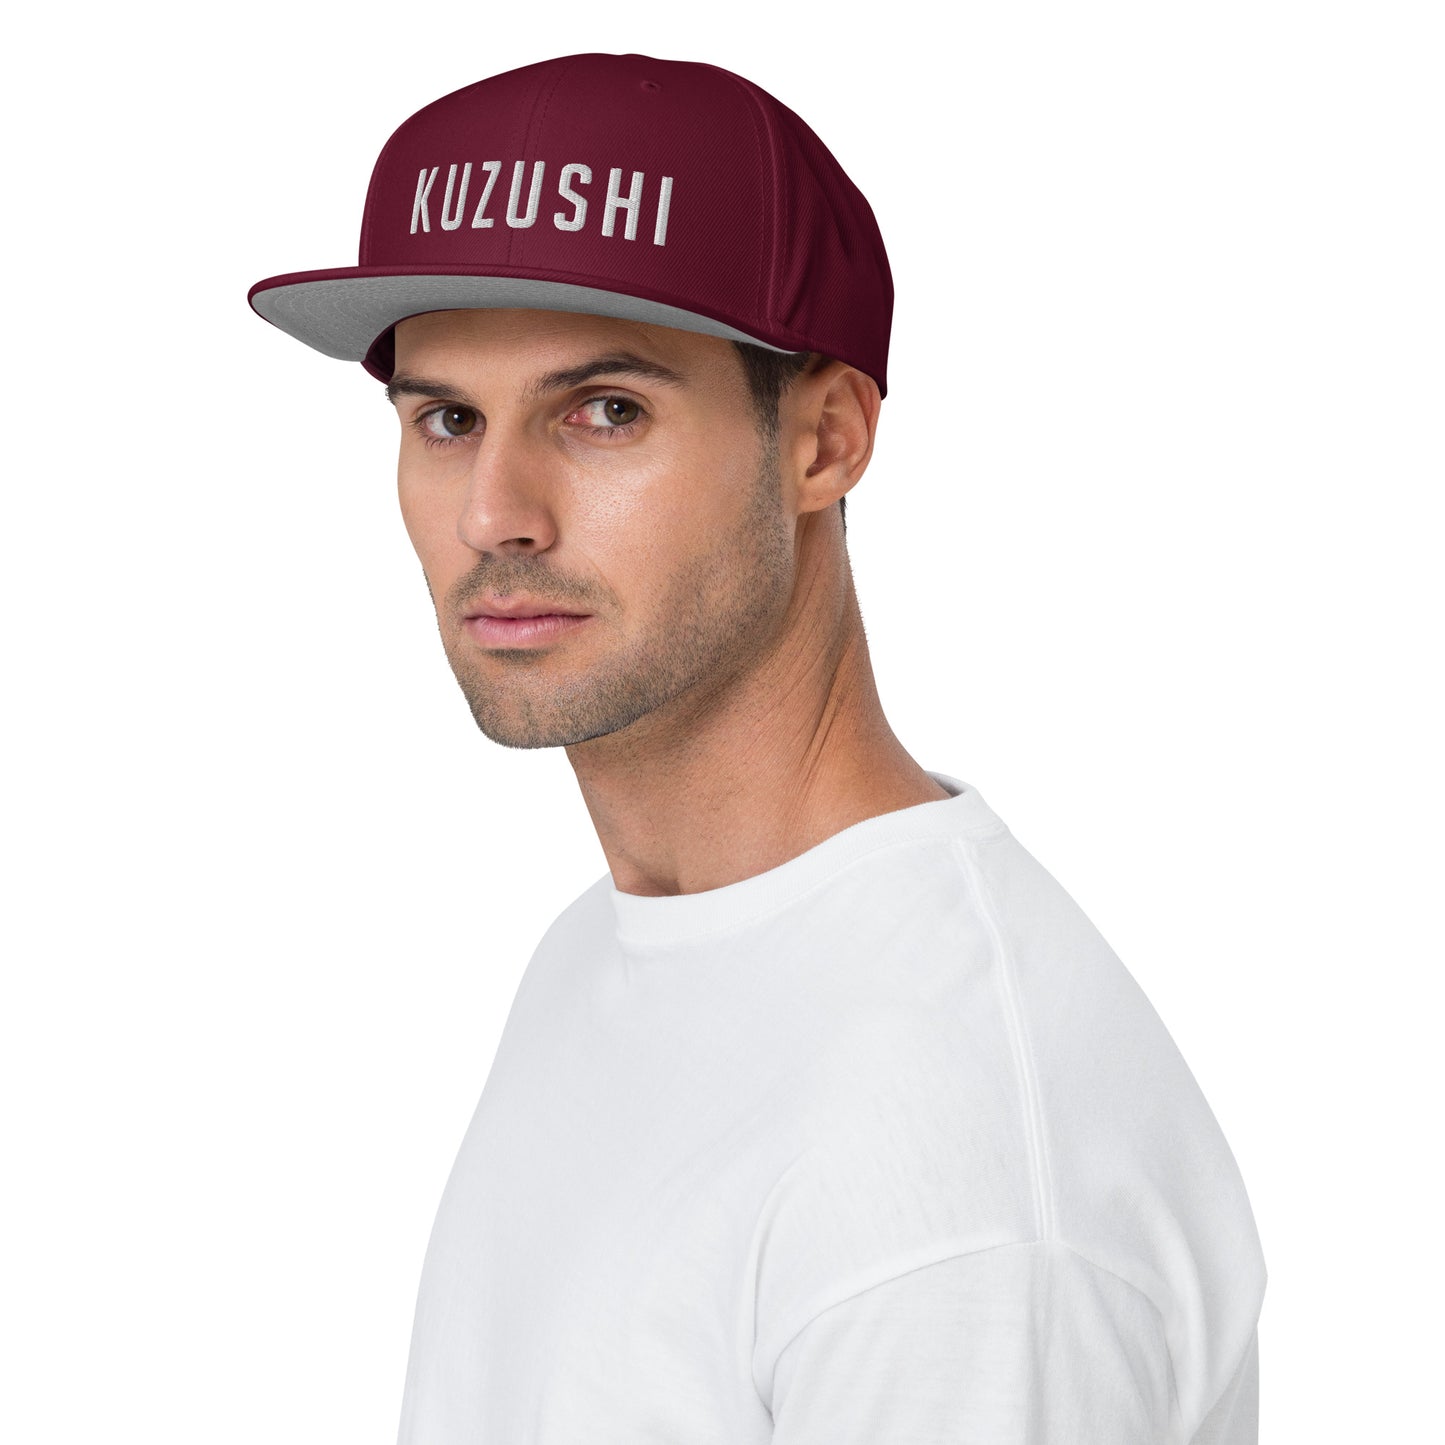 BJJ Couture Kuzushi Snapback Hat